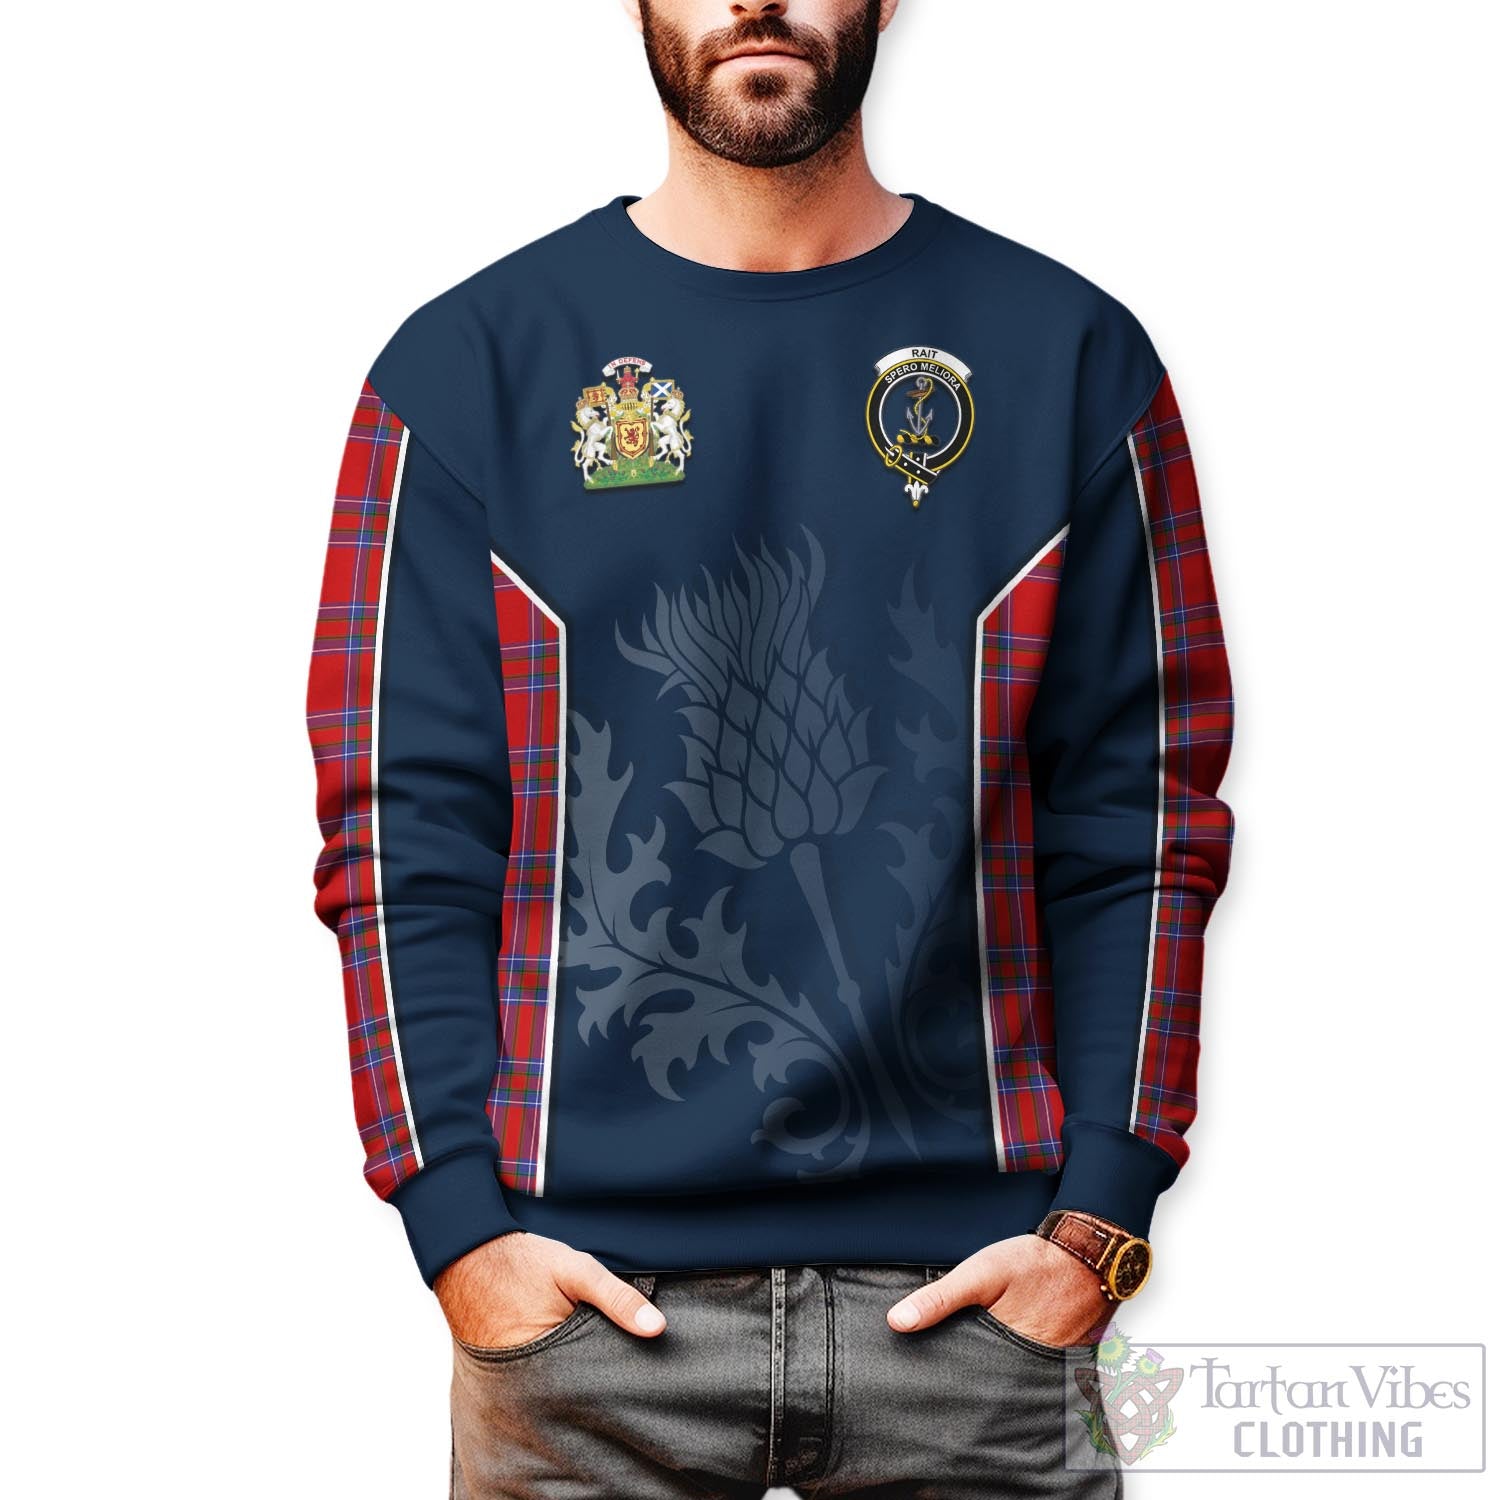 Tartan Vibes Clothing Rait Tartan Sweatshirt with Family Crest and Scottish Thistle Vibes Sport Style